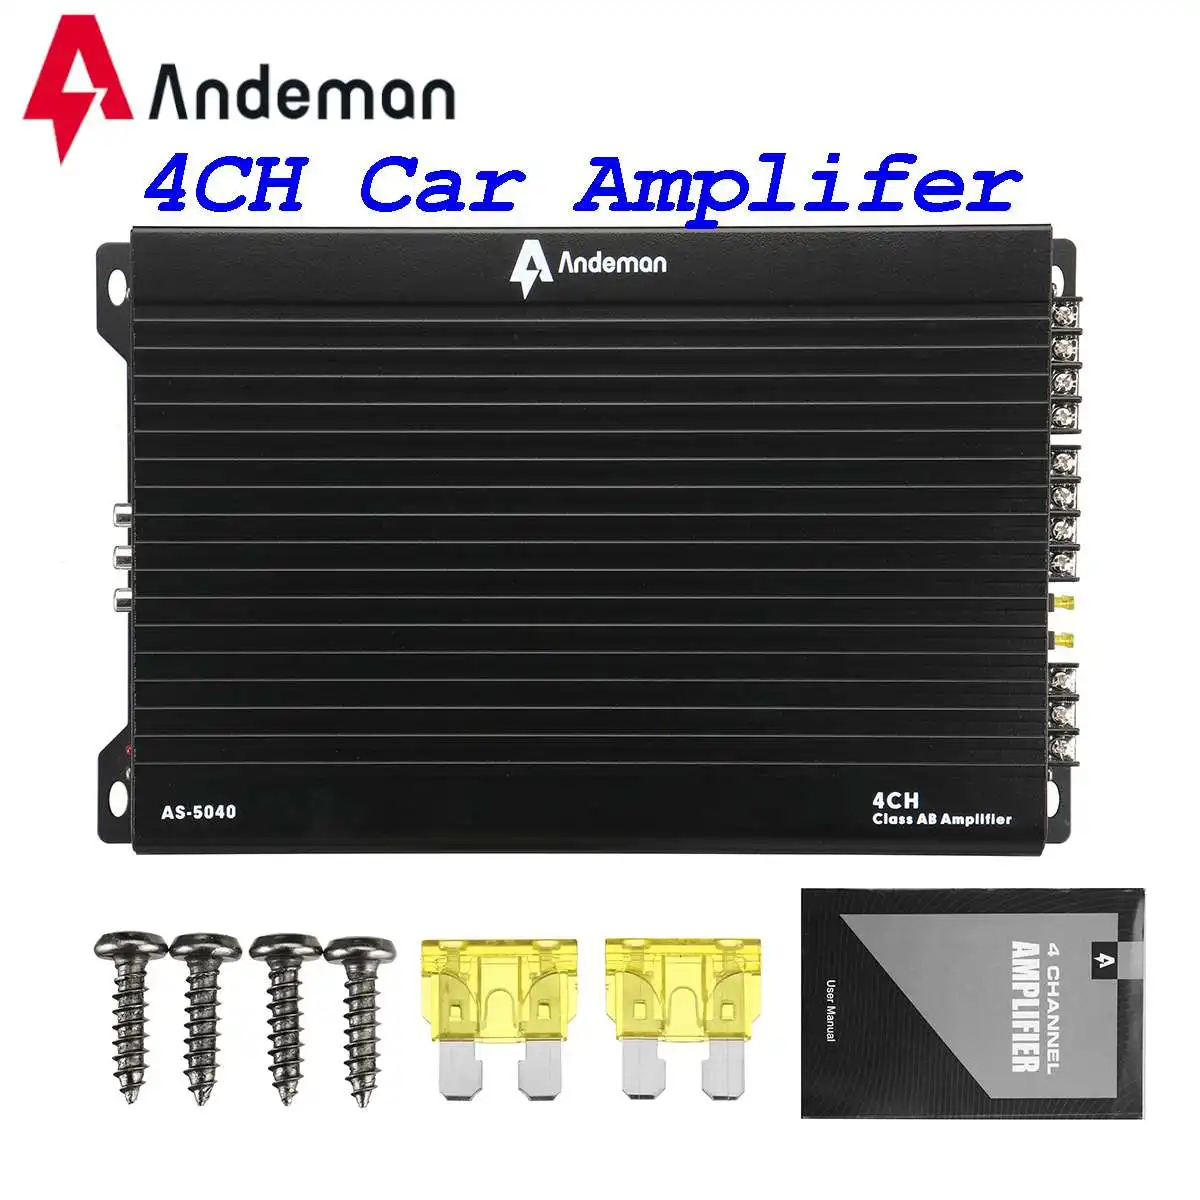 Andeman 4 Channel 12V AS-5040 Car Amplifers 4CH Powerful Min